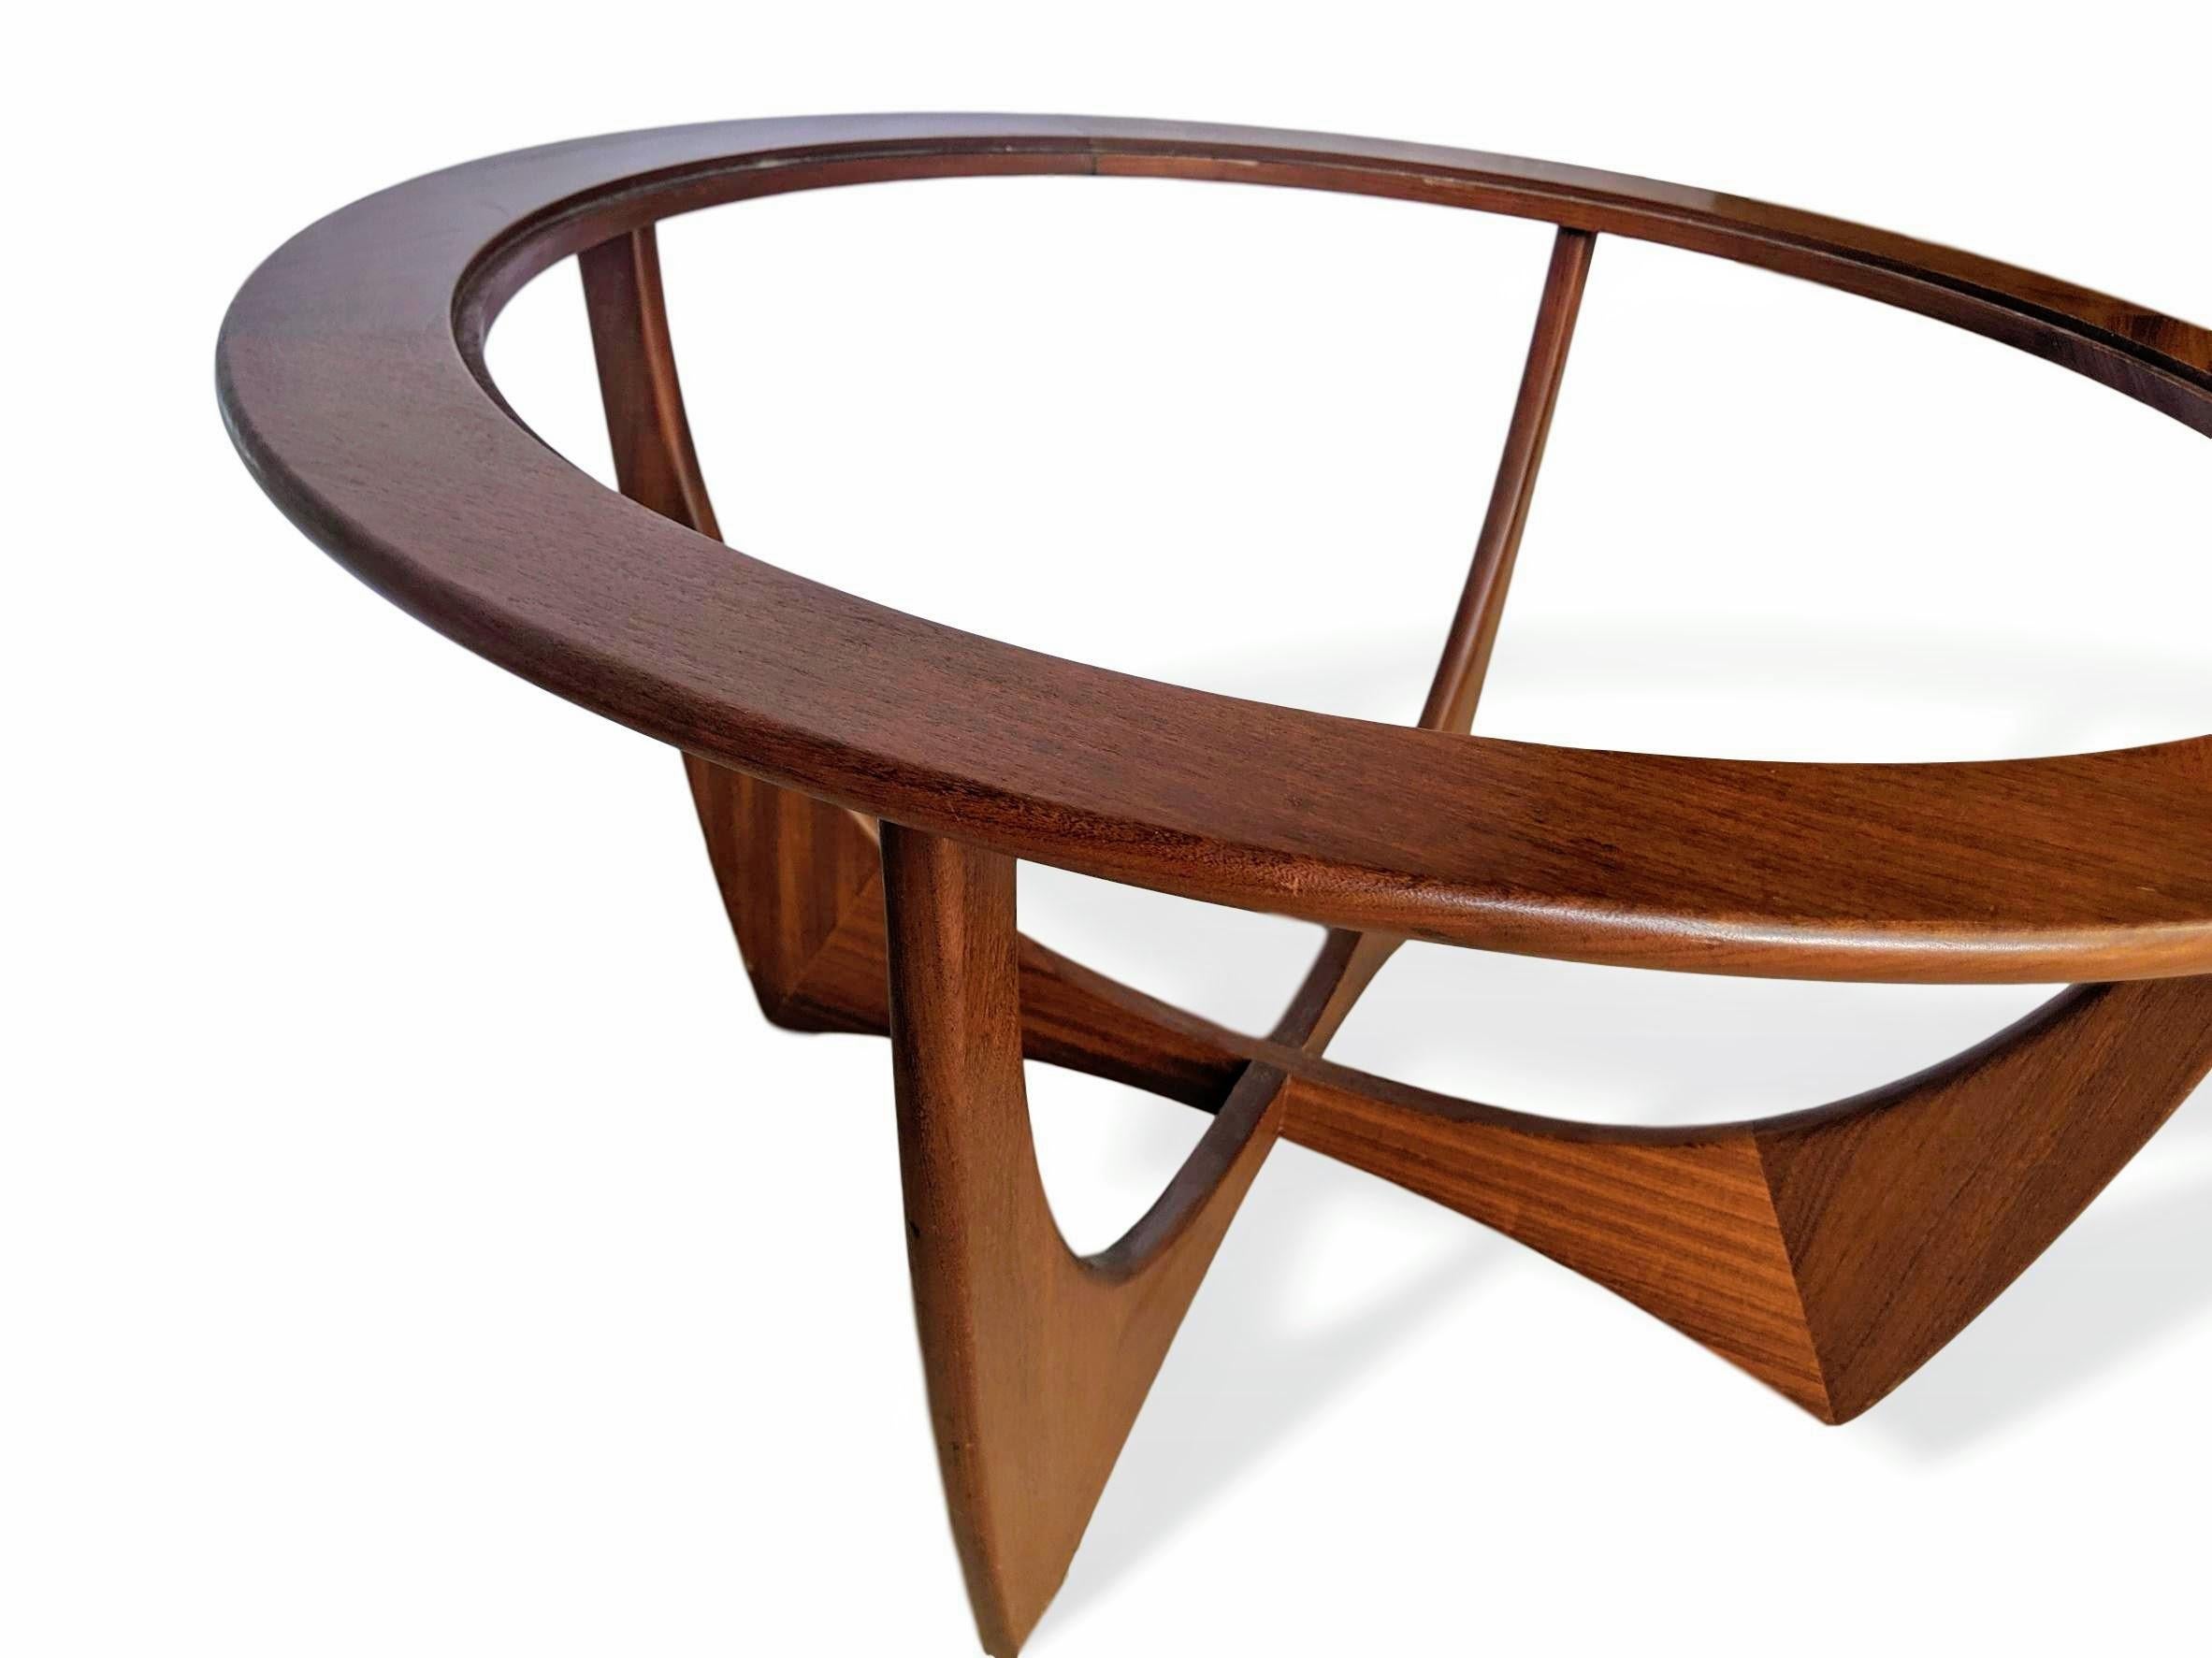 Teak Mid-Century Modern “Astro” Coffee Table by G-Plan, English, circa 1960